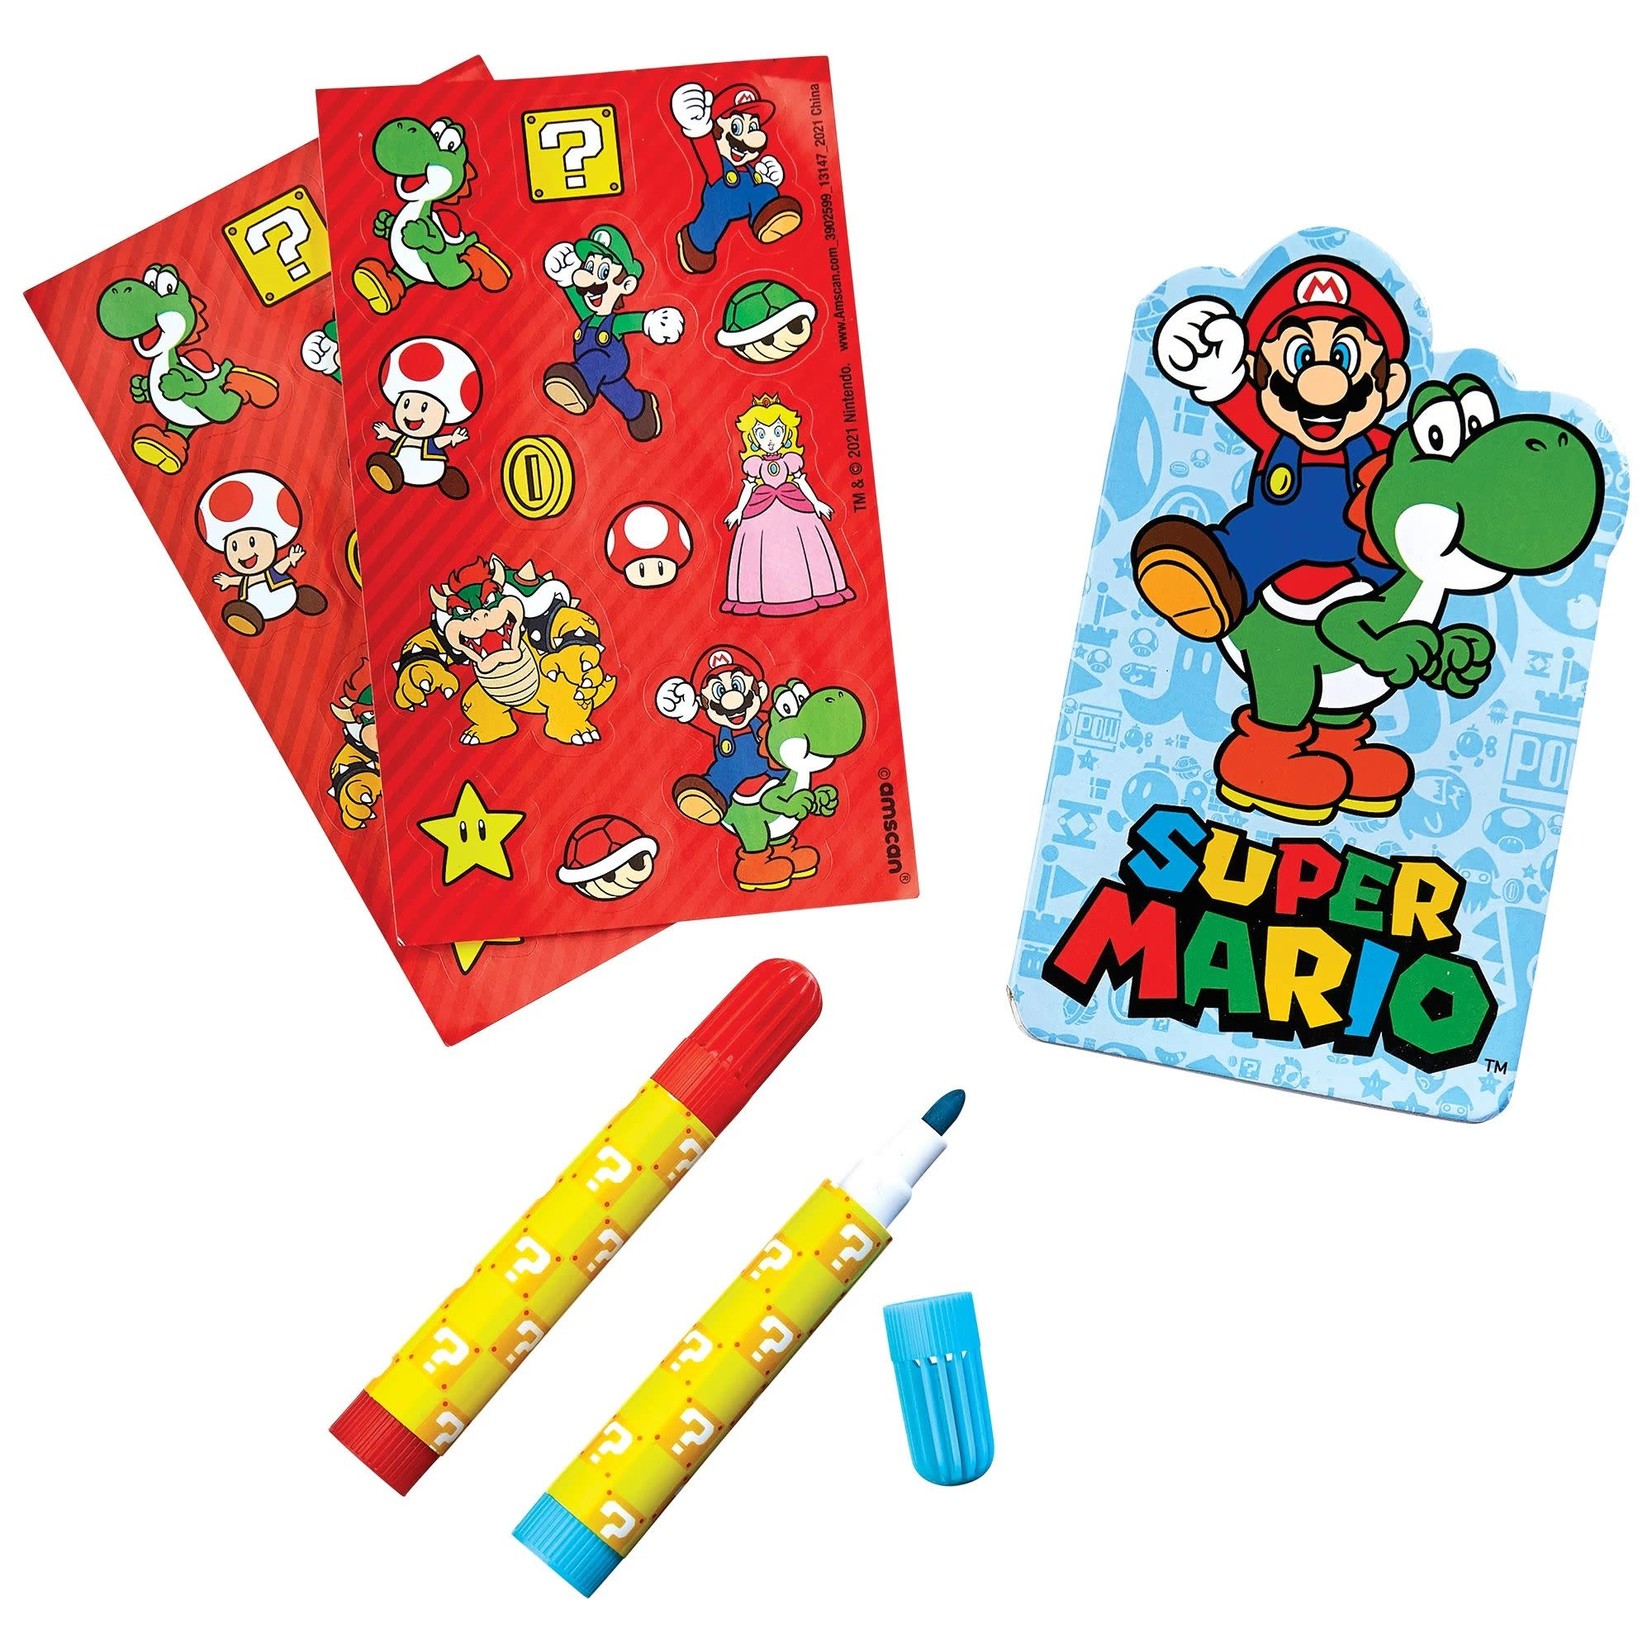 Super Mario Brothers Stationery Set